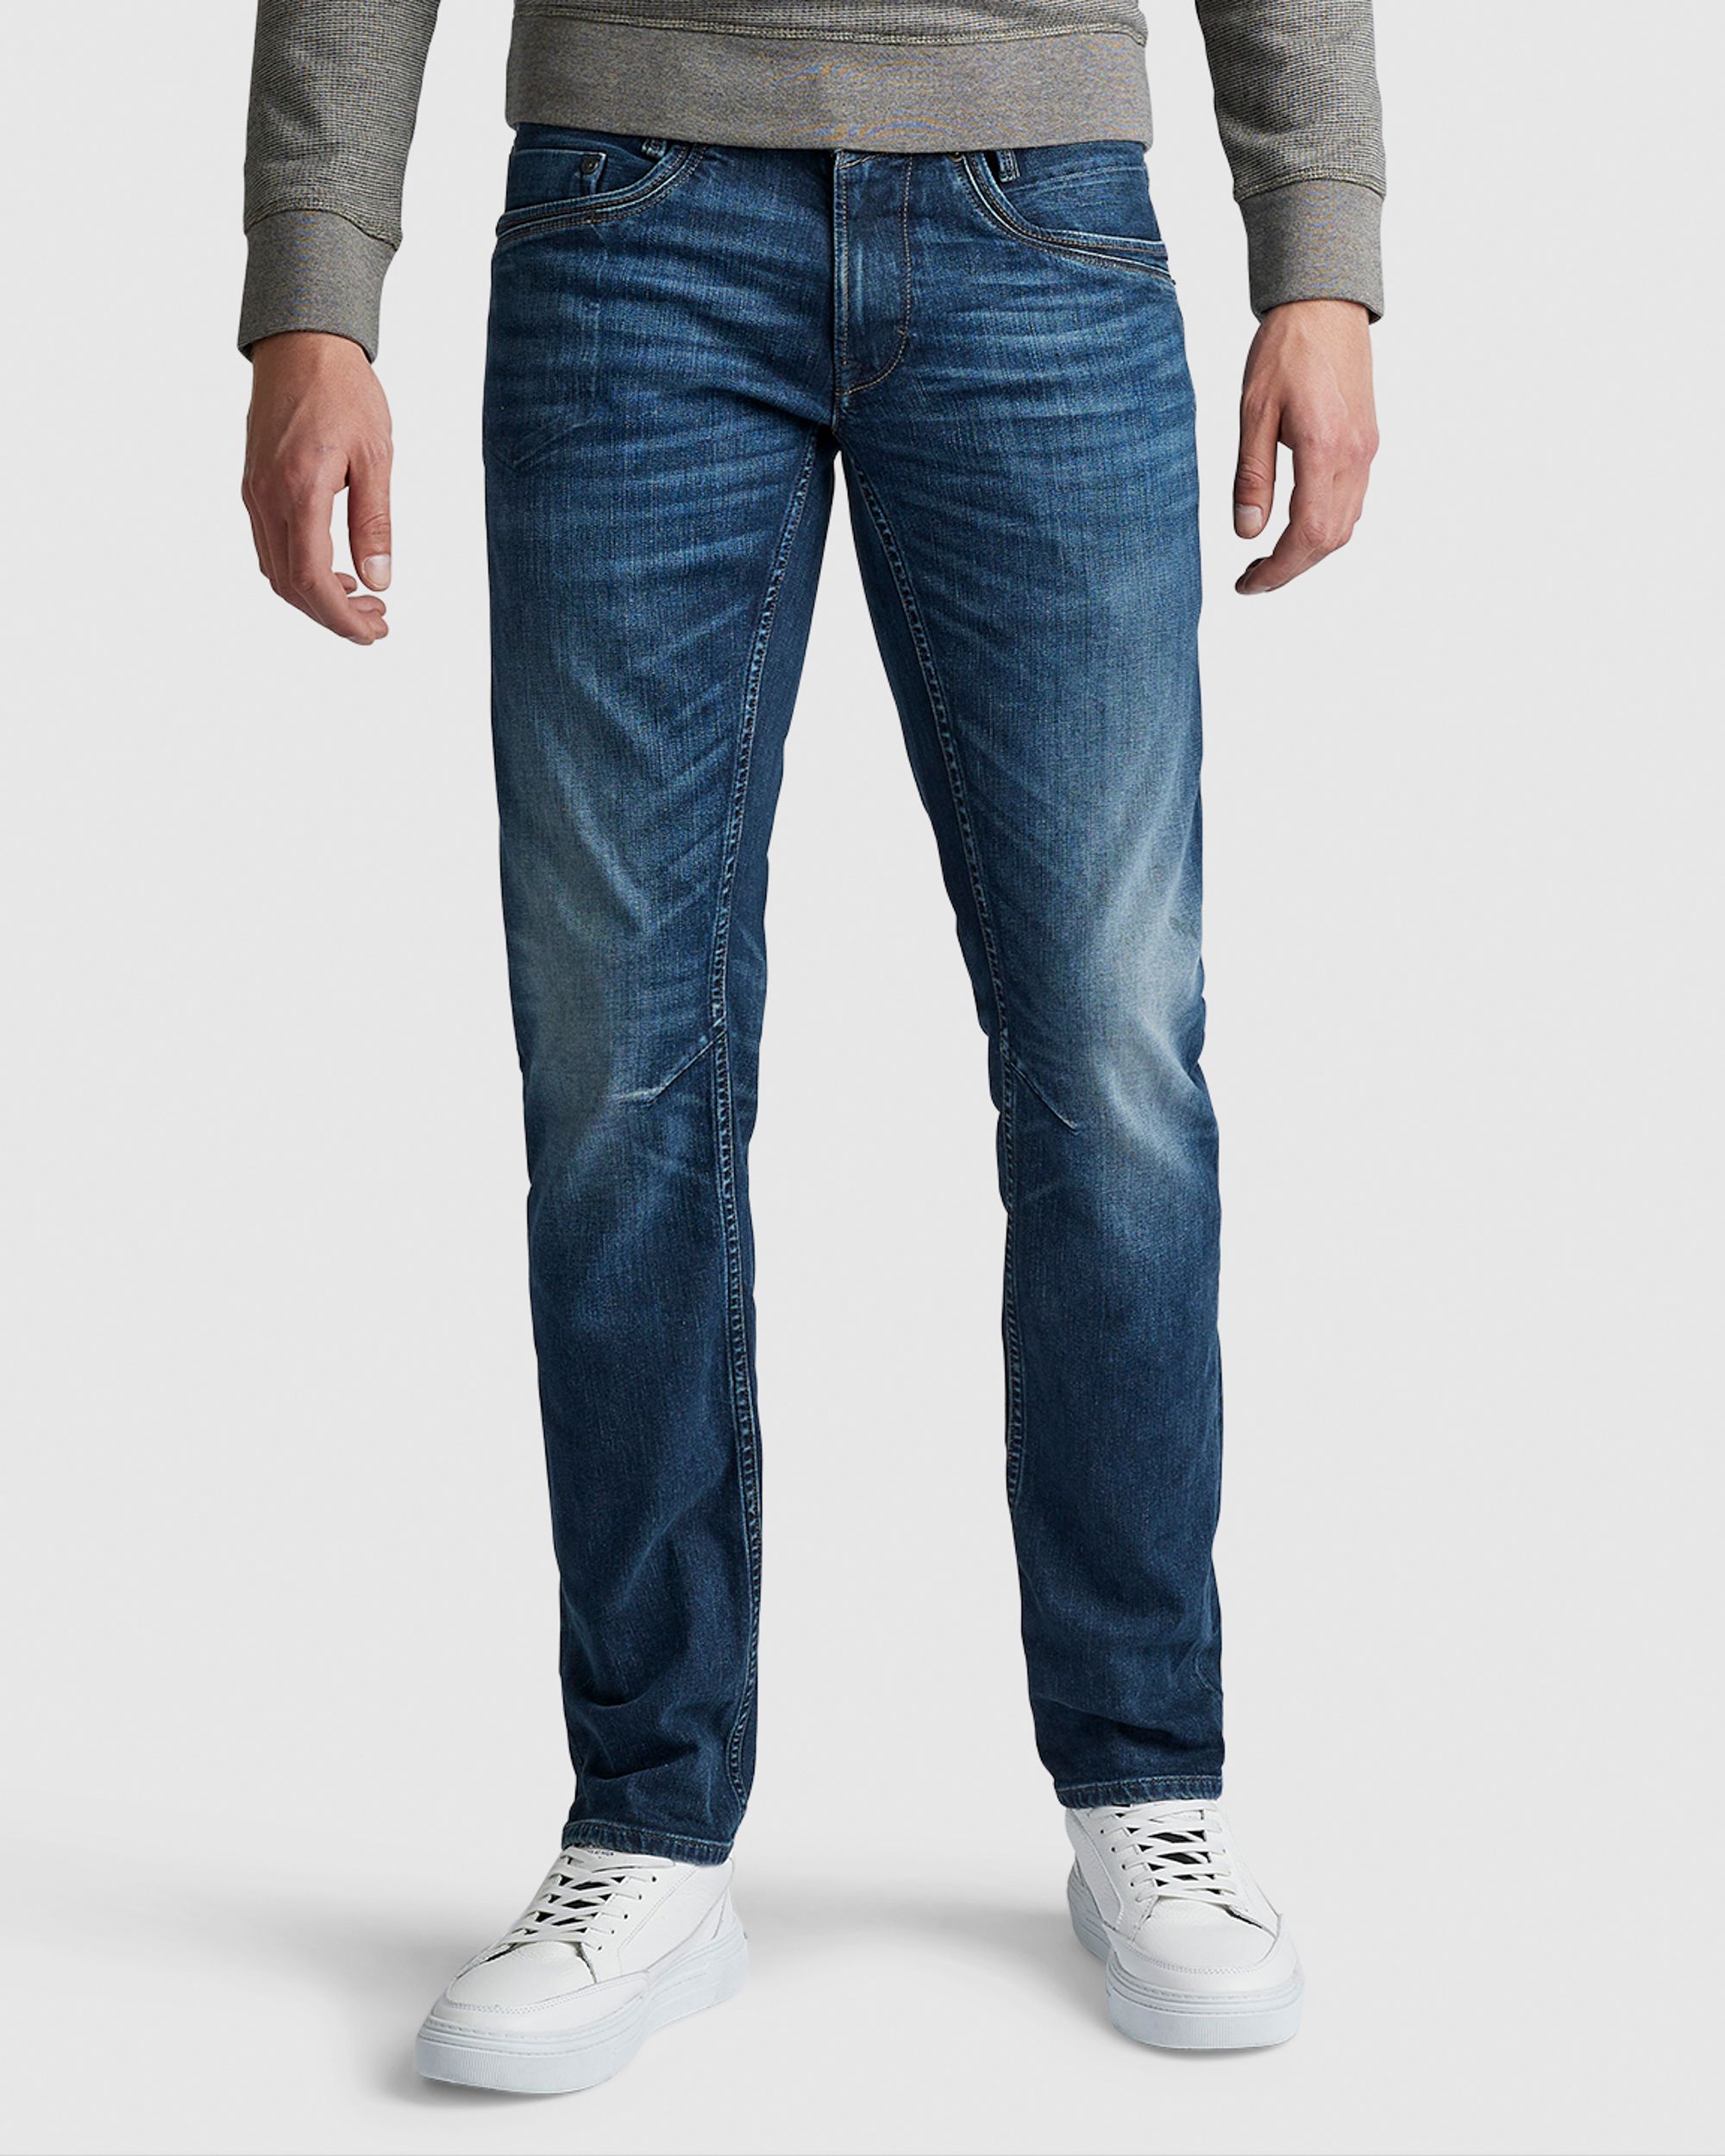 PME Legend Skymaster Jeans Donker blauw 070841-001-28/30